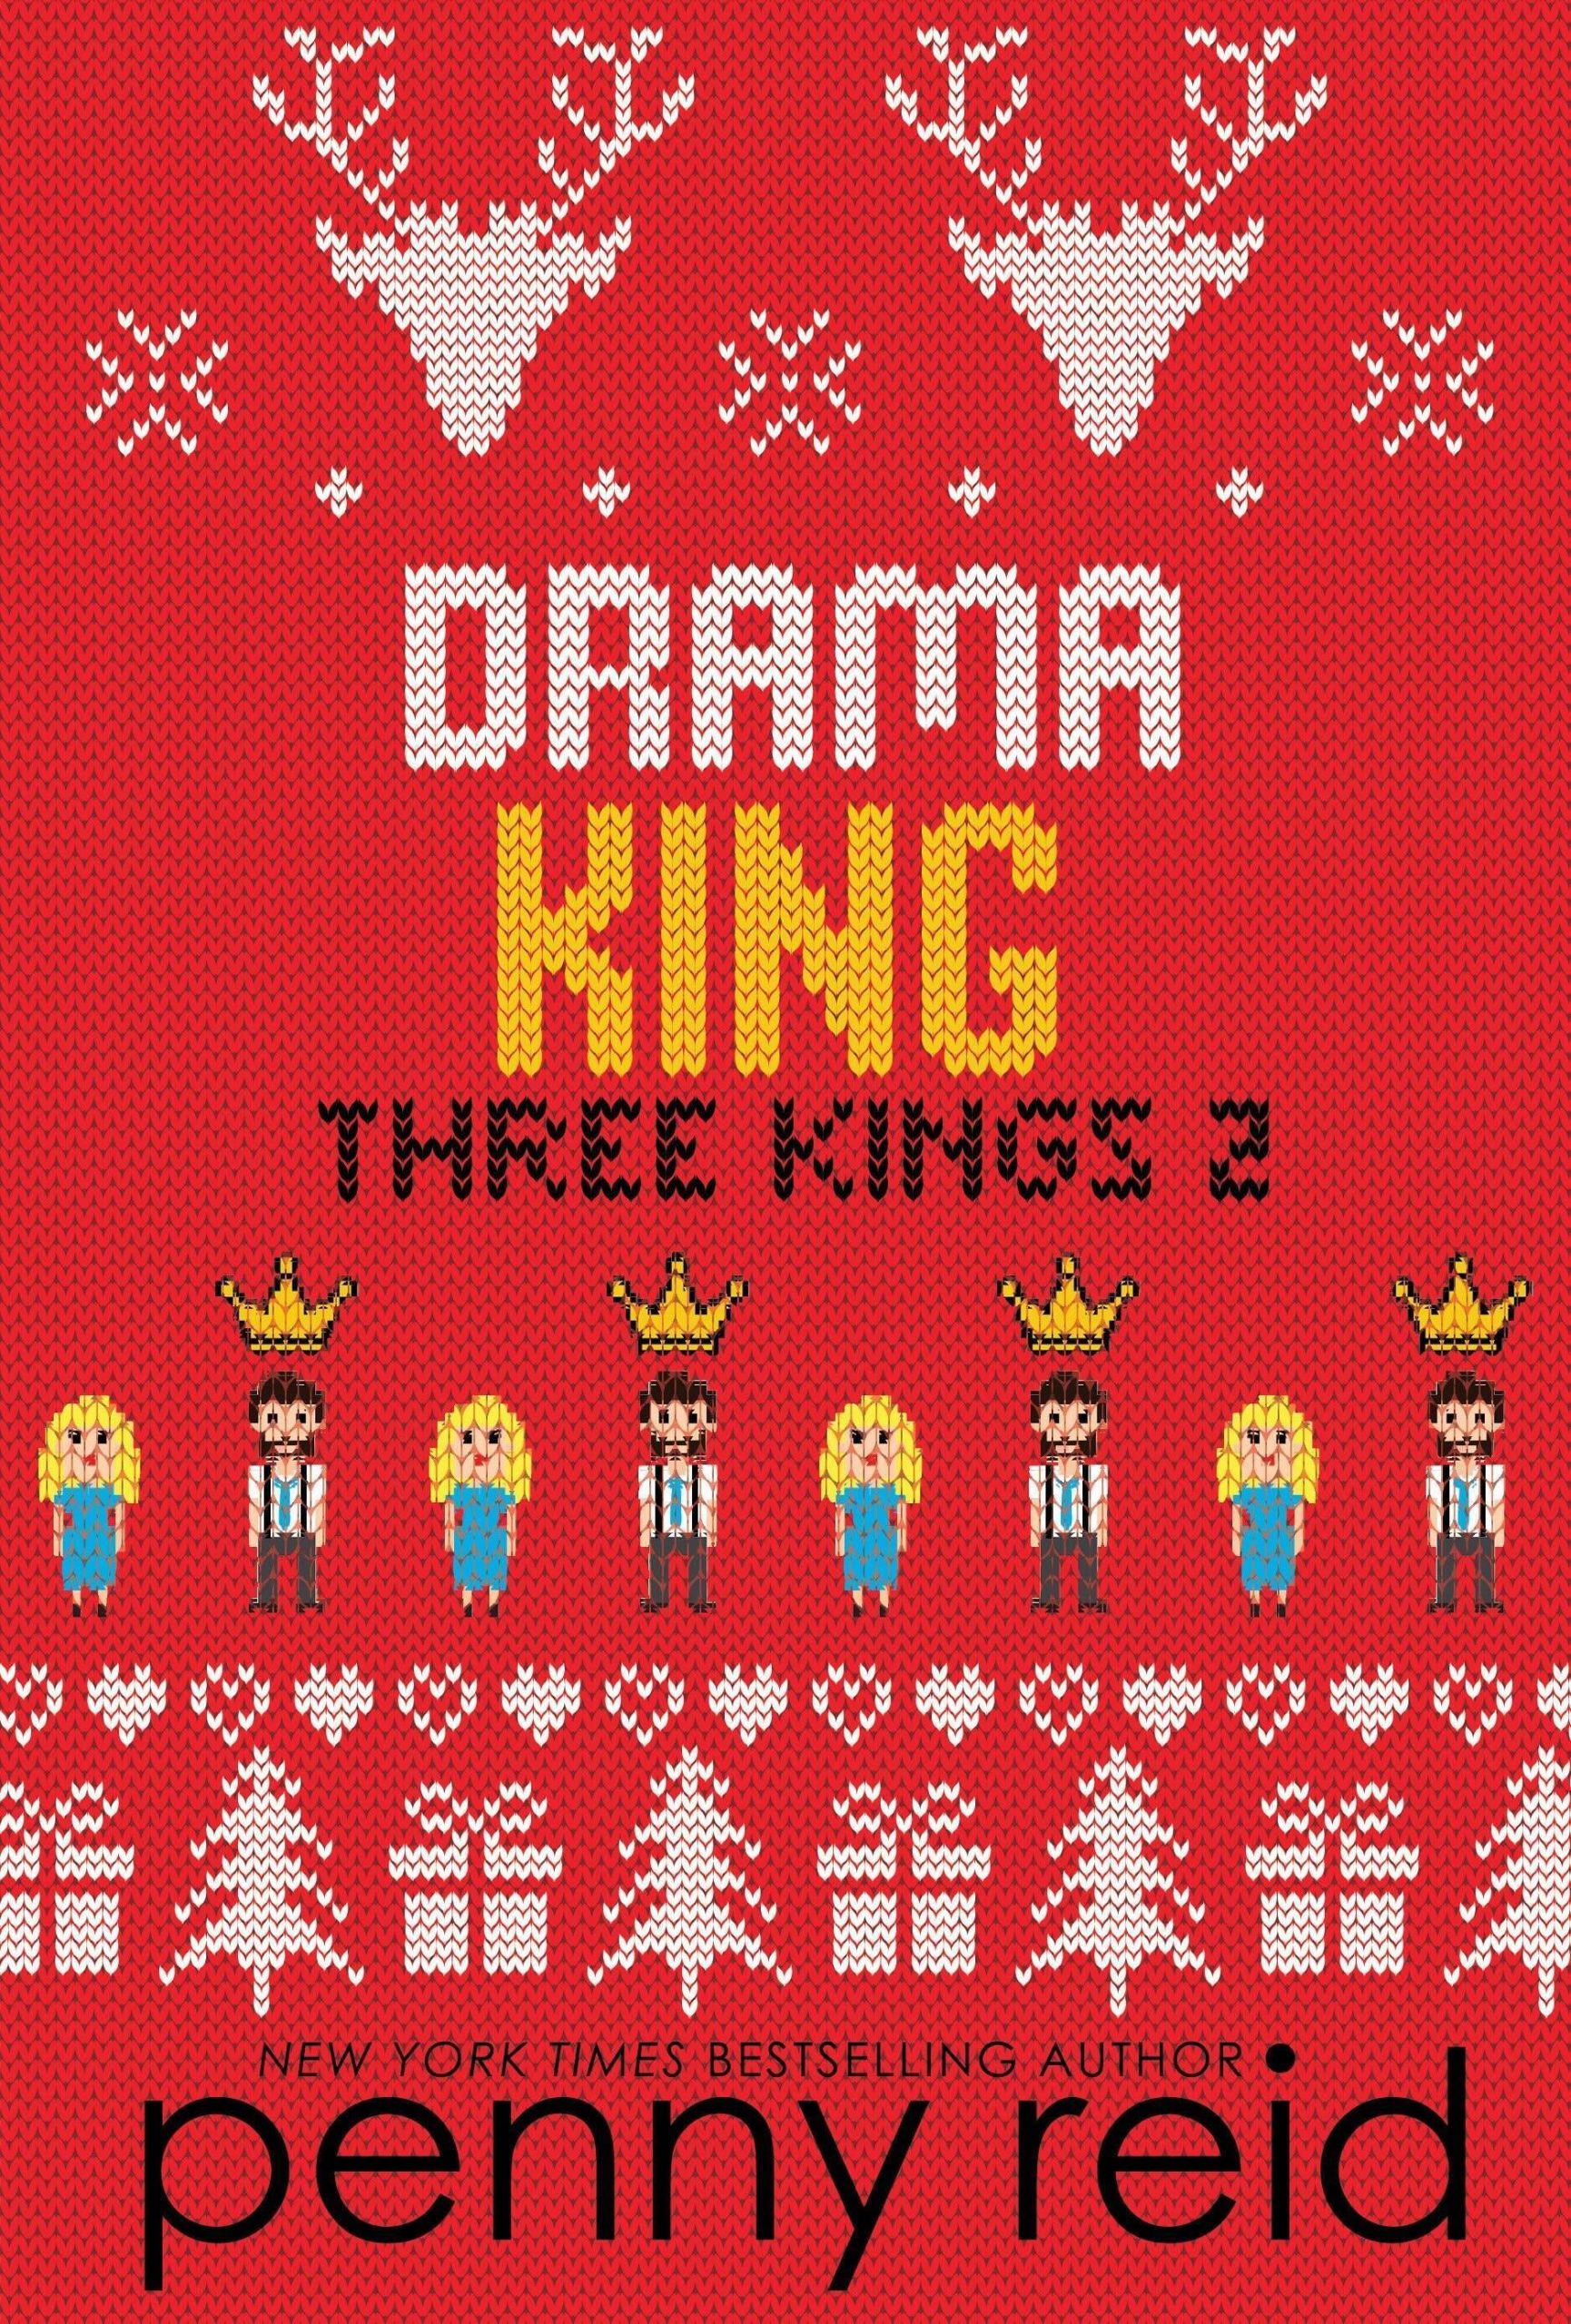 Drama King by Penny Reid